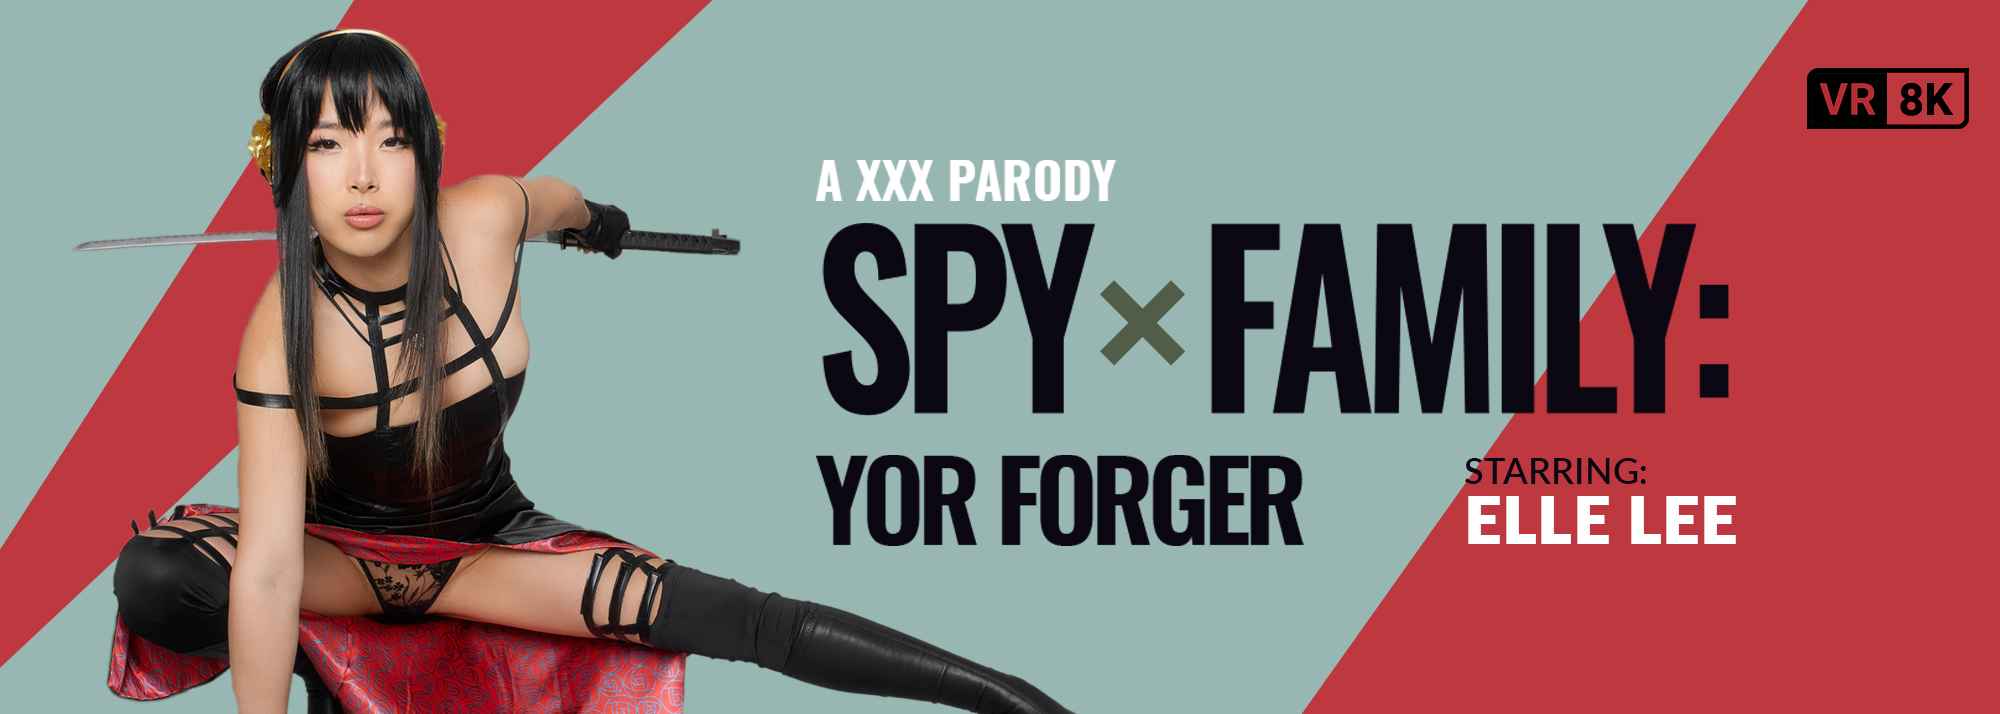 Spy X Family: Yor Forger (A XXX Parody) - VR Porn Video, Starring Elle Lee VR